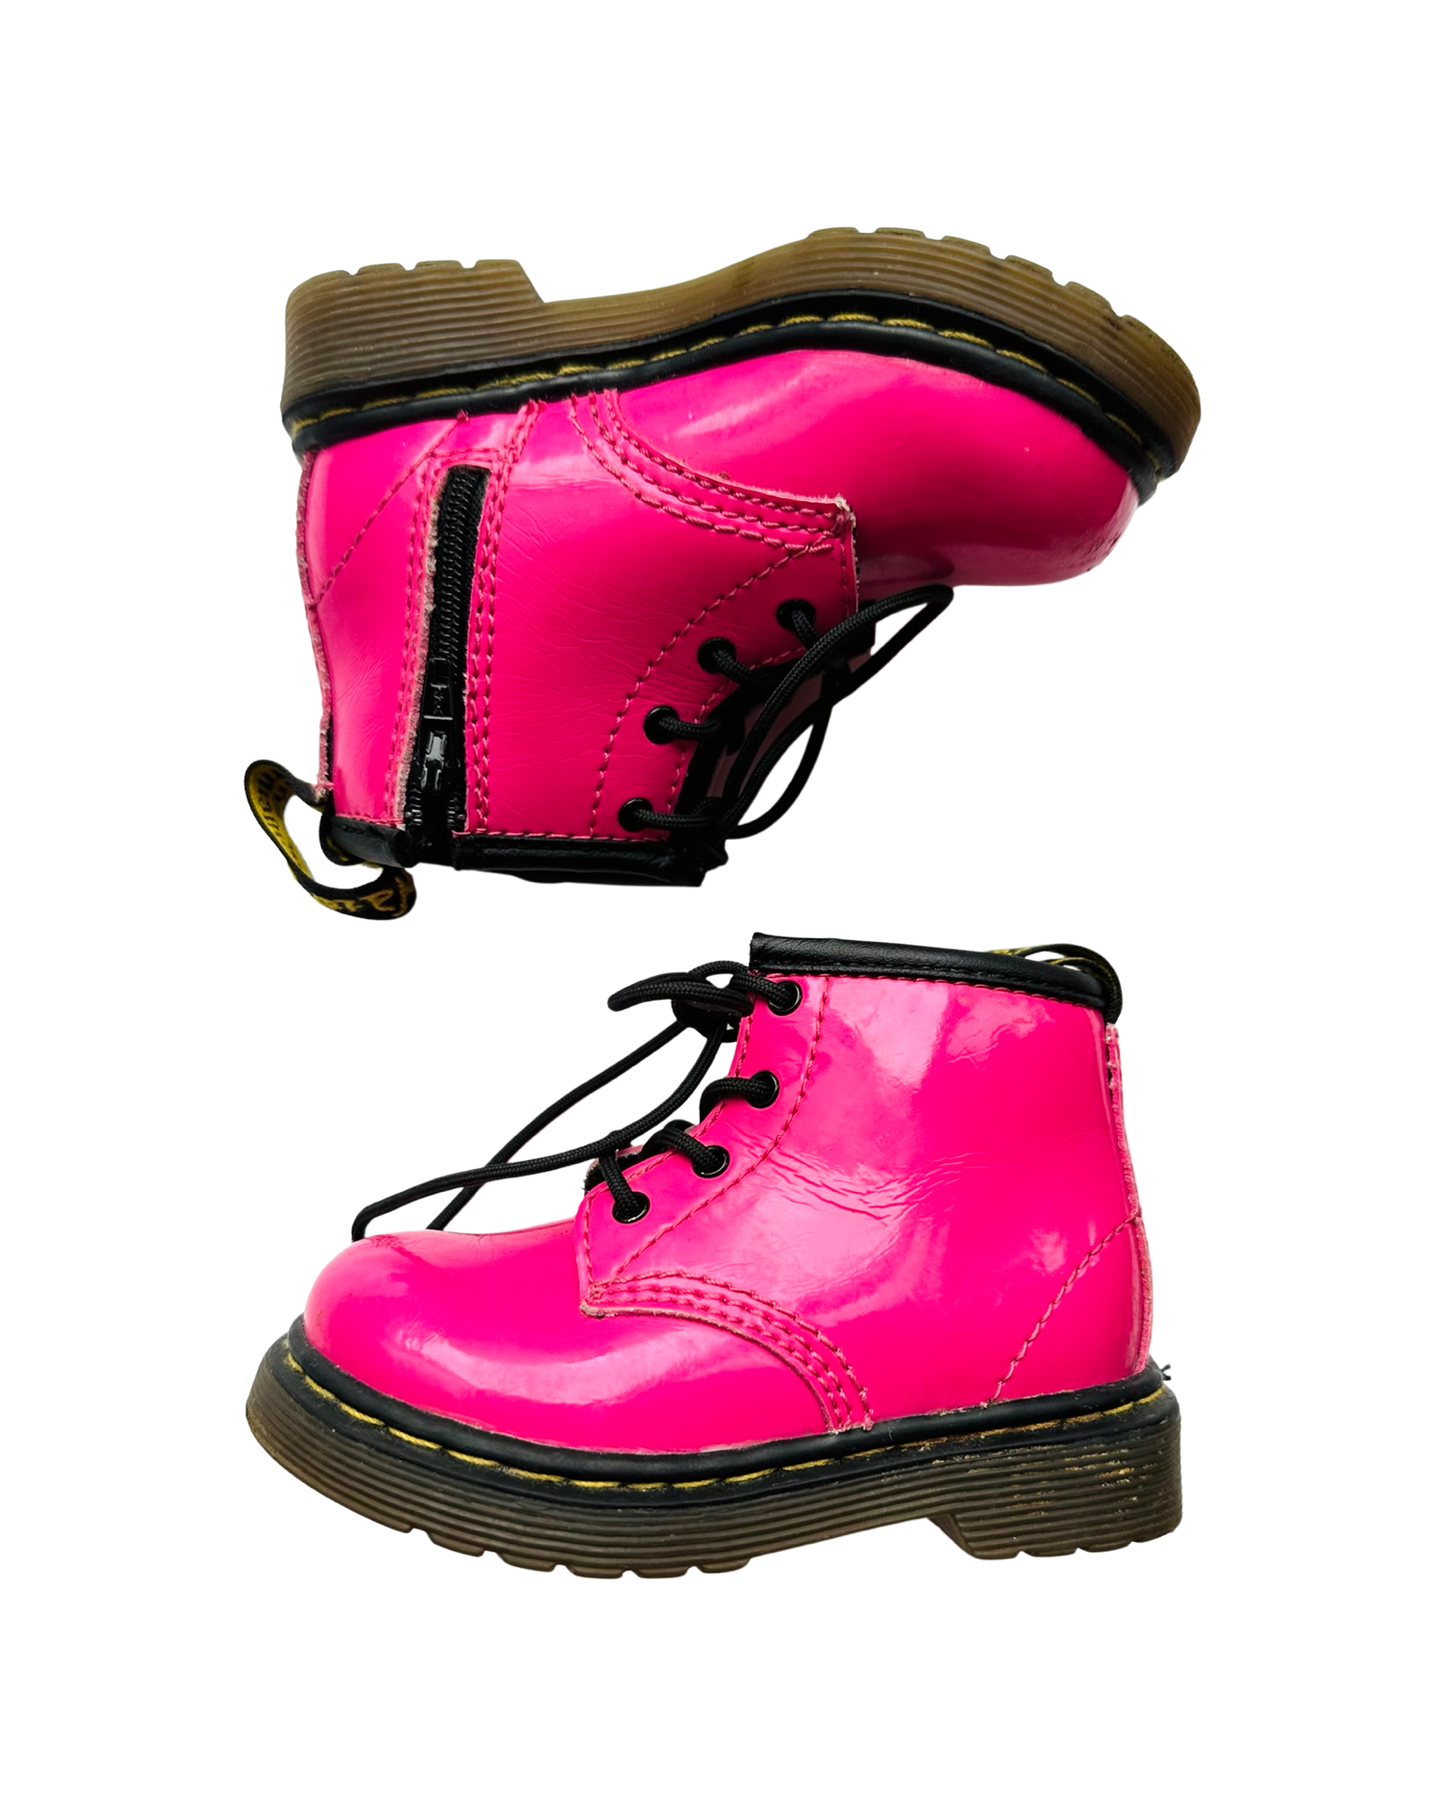 Dr Marten 1460 hot pink toddler boot (size UK4/EU21)